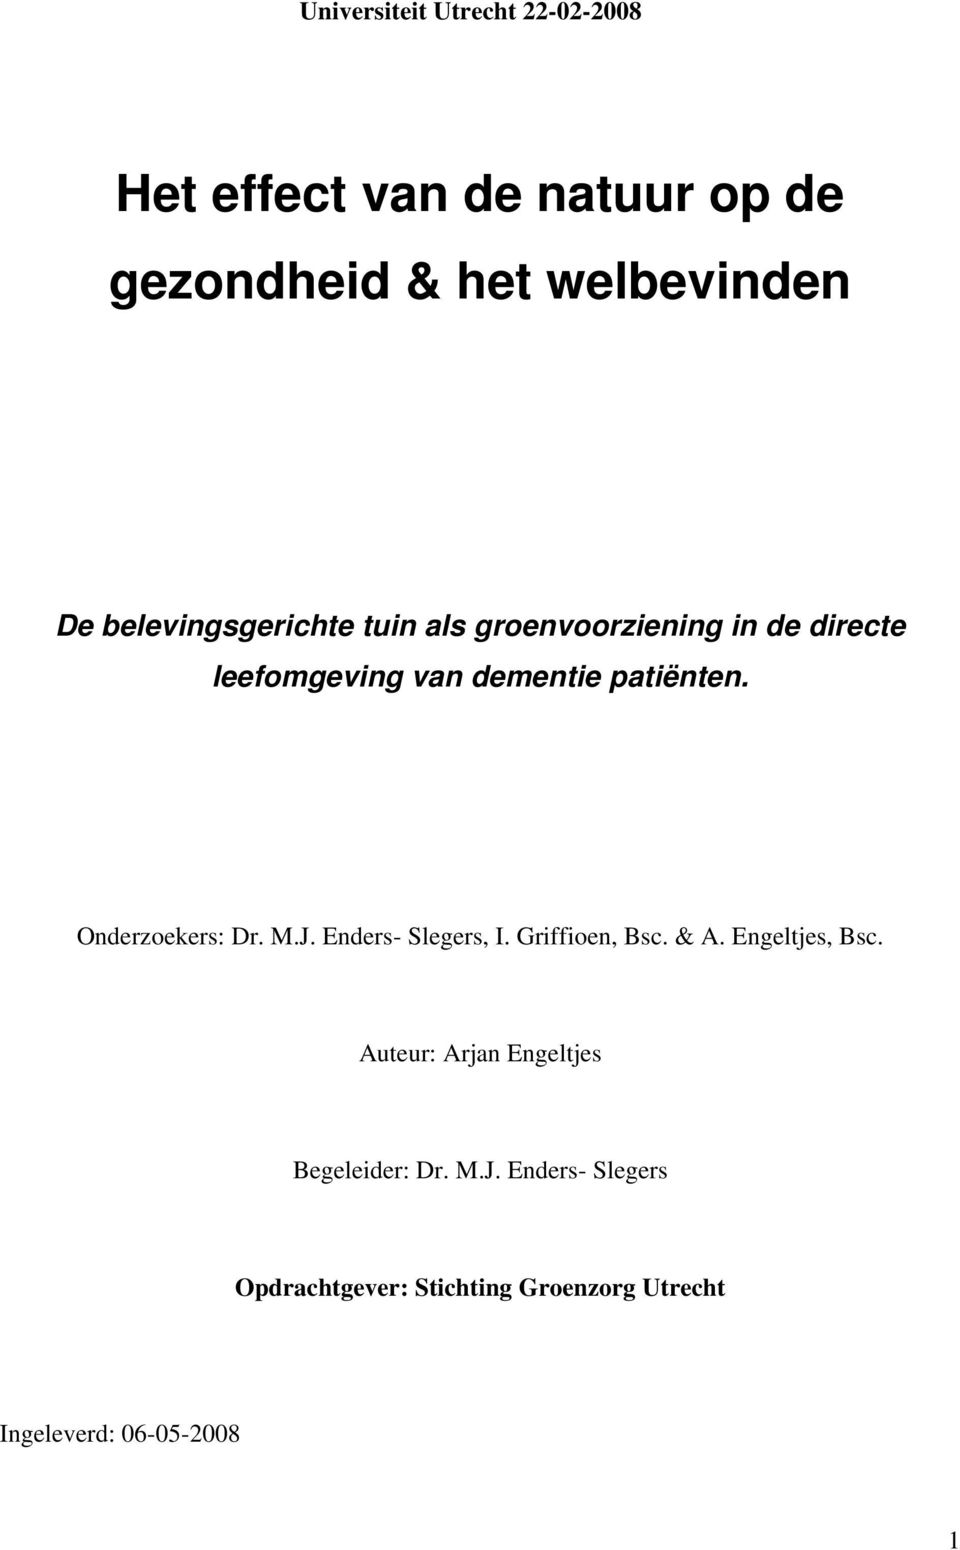 Onerzoekers: Dr. M.J. Eners- Slegers, I. Griffioen, Bsc. & A. Engeltjes, Bsc.